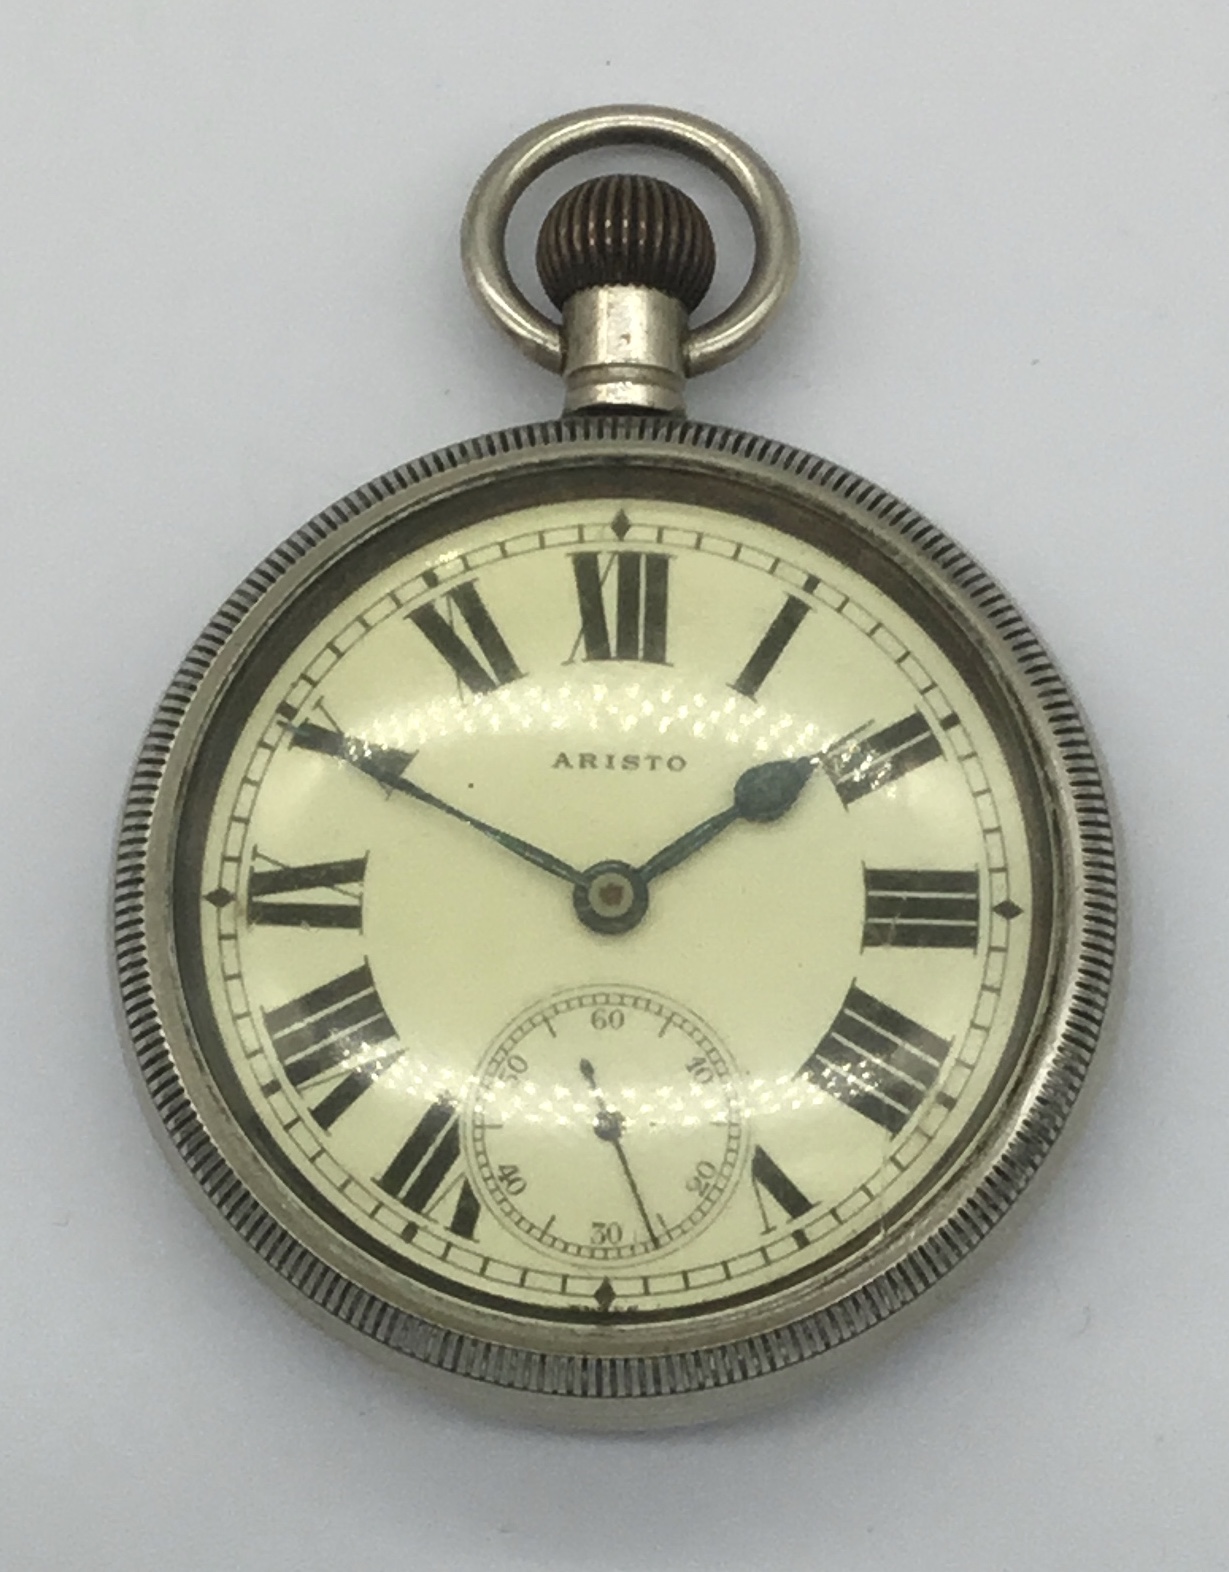 A WW2 era Aristo Admiralty pocket watch (possibly for submarine use), with 15 jewel Swiss